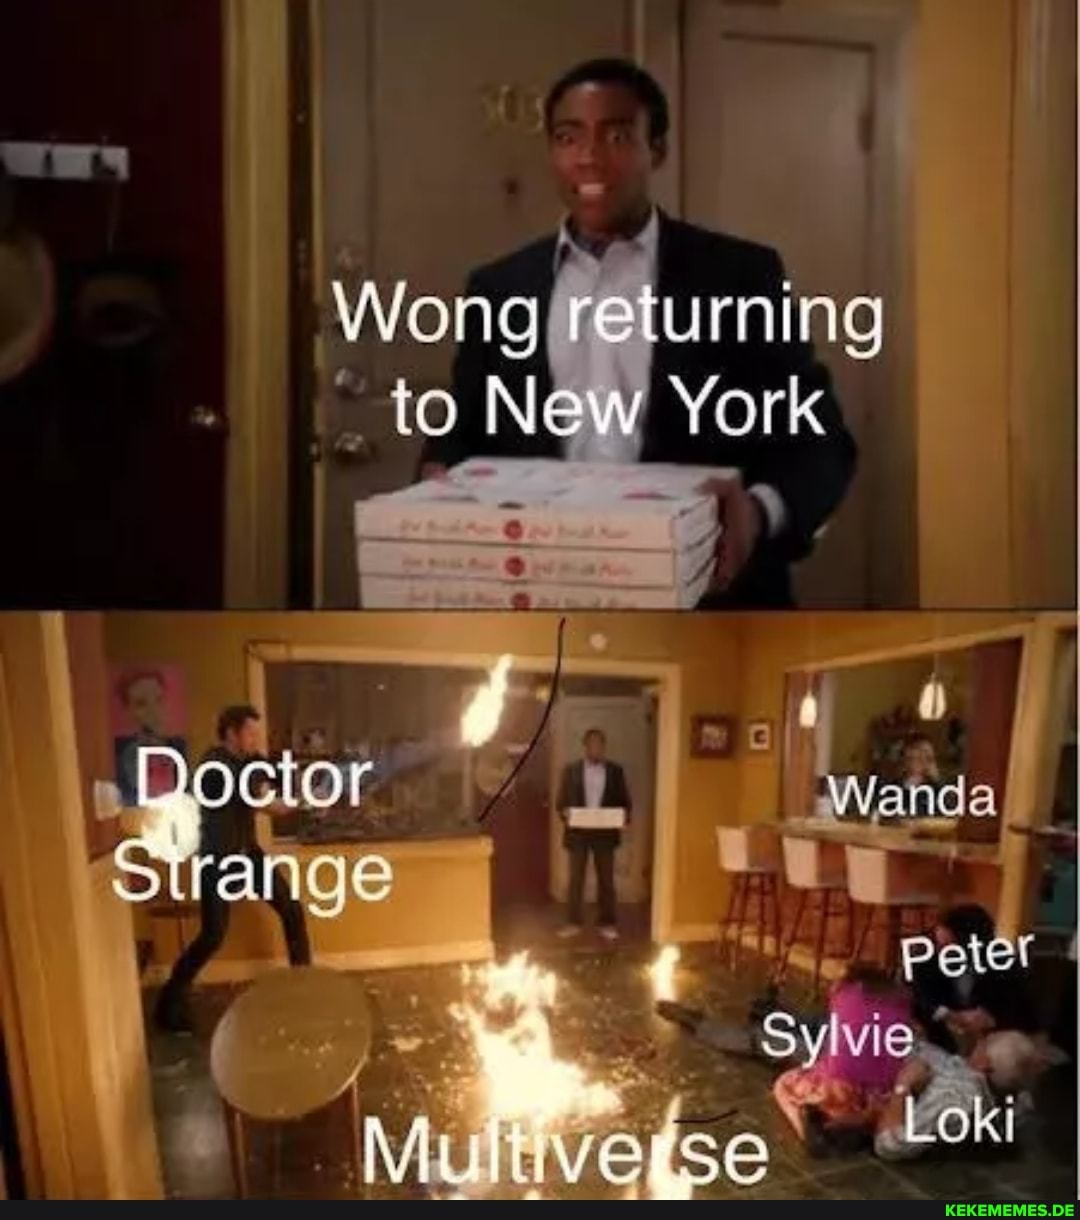 Wong returning to New York an Wanda Peter Loki